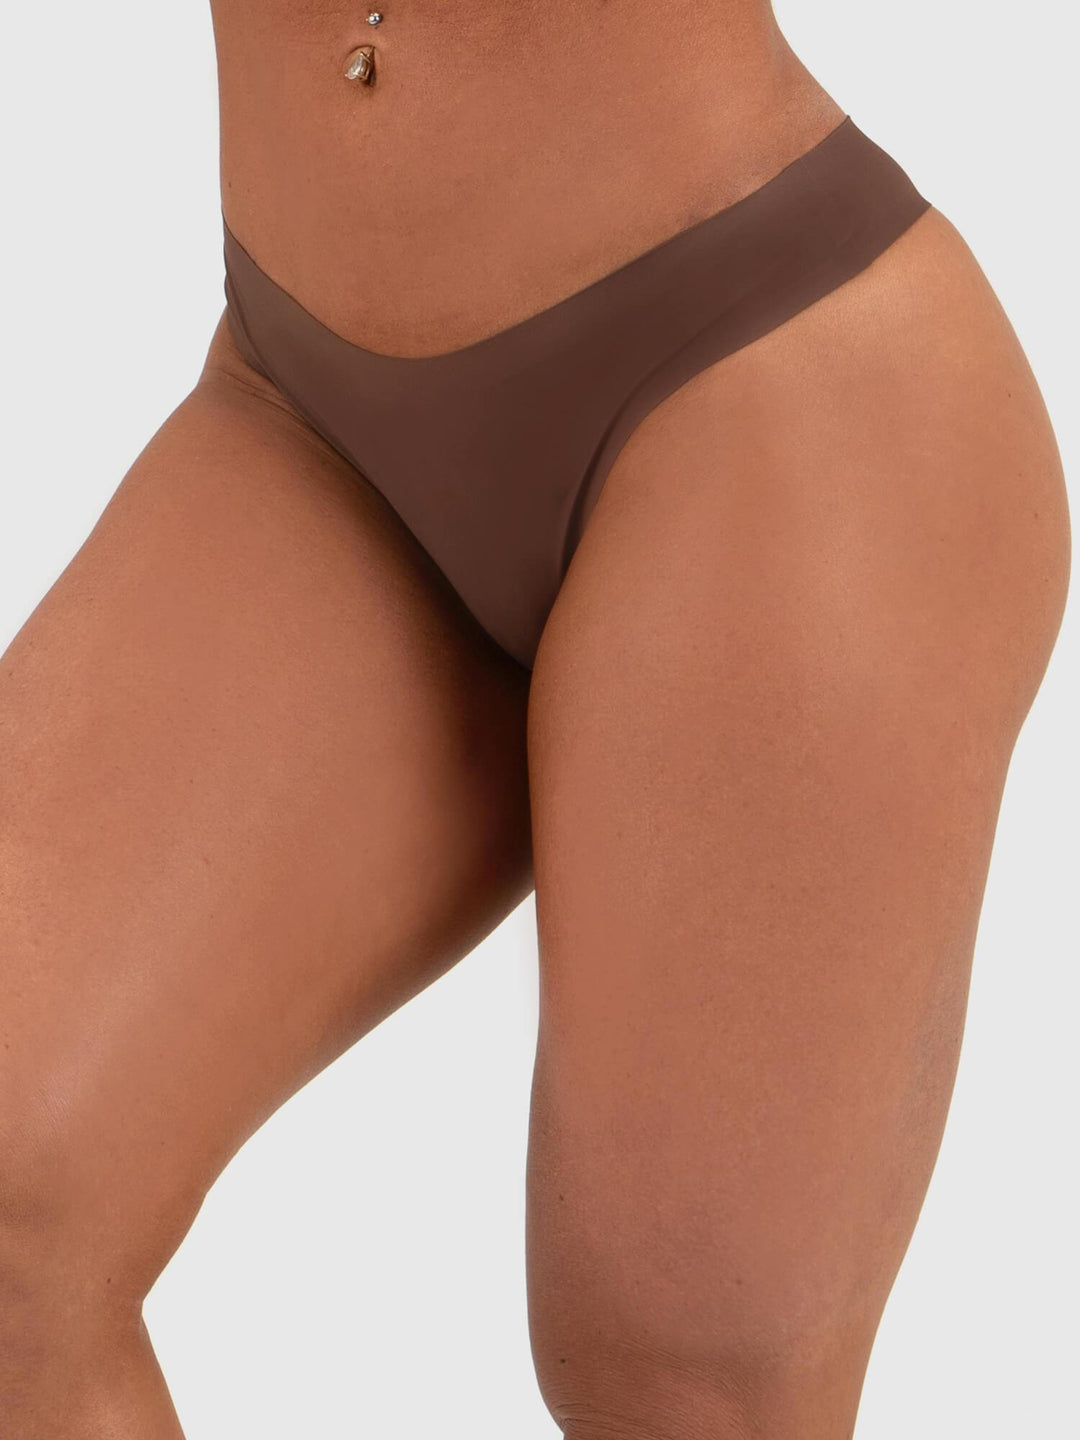 Essentials Women's Seamless Bonded Stretch Thong Underwear, Pack of 4